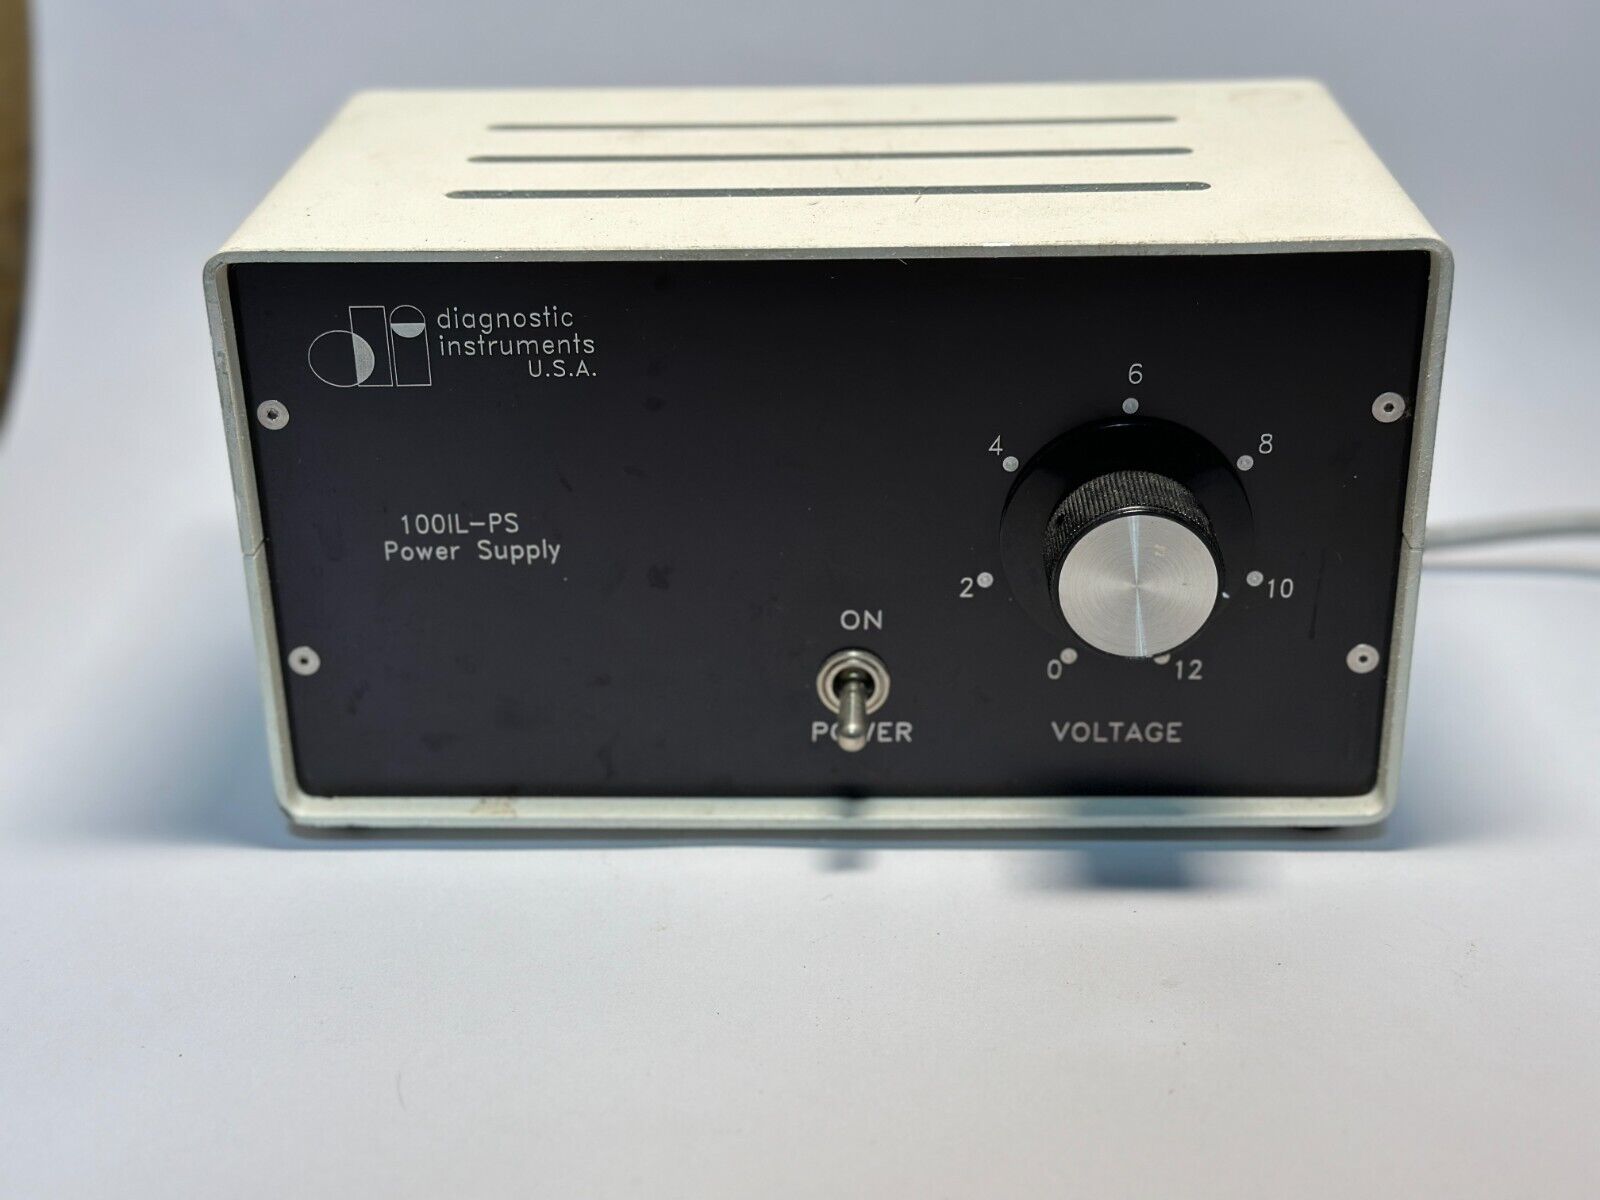 12 Volt Microscope Power Supply Diagnostic Instruments USA 100IL-PS